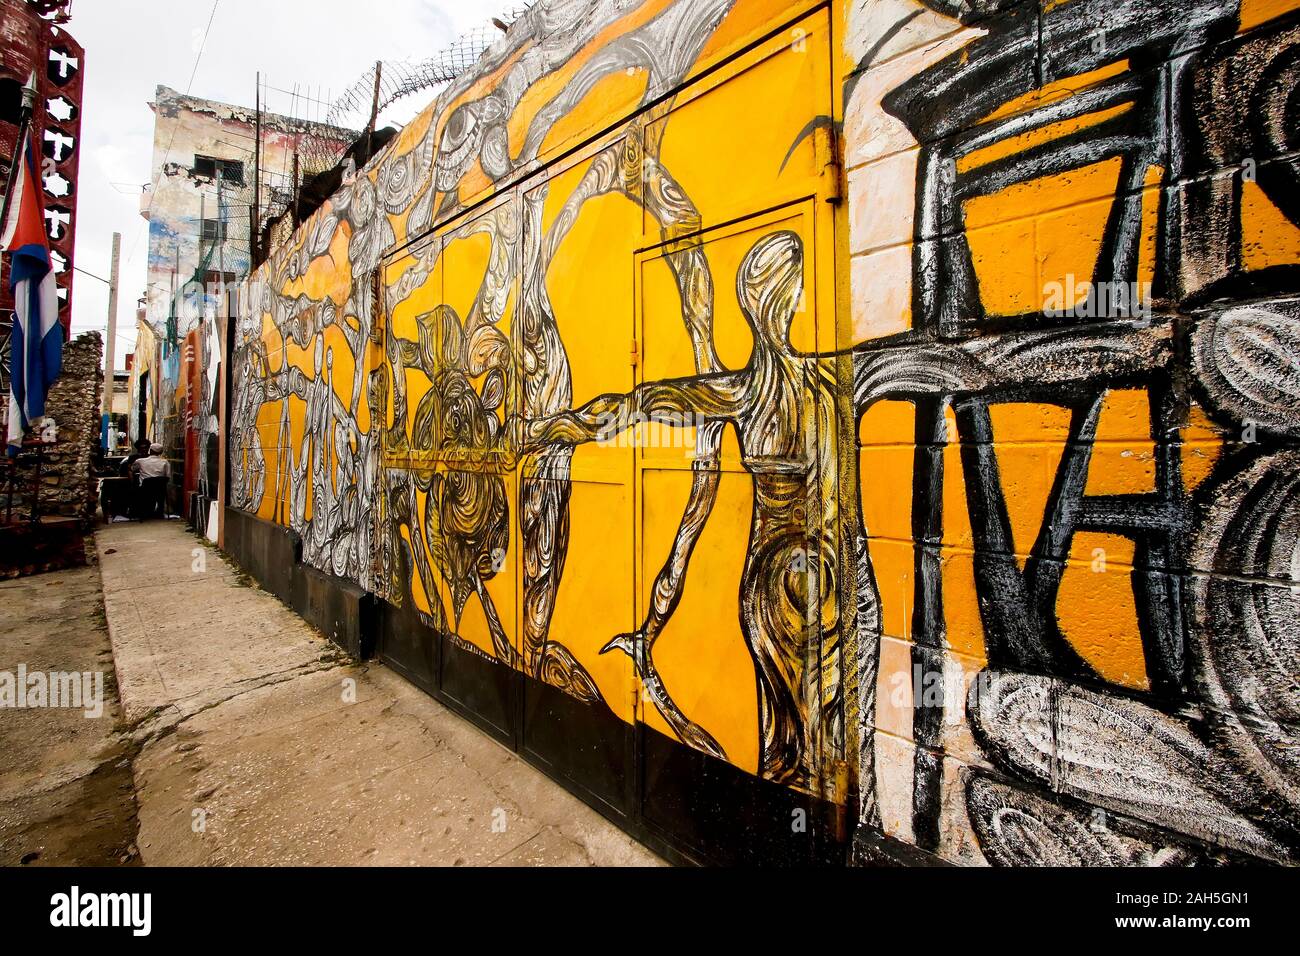 Art installations inside Hamel's Alley in Havana, Cuba Stock Photo